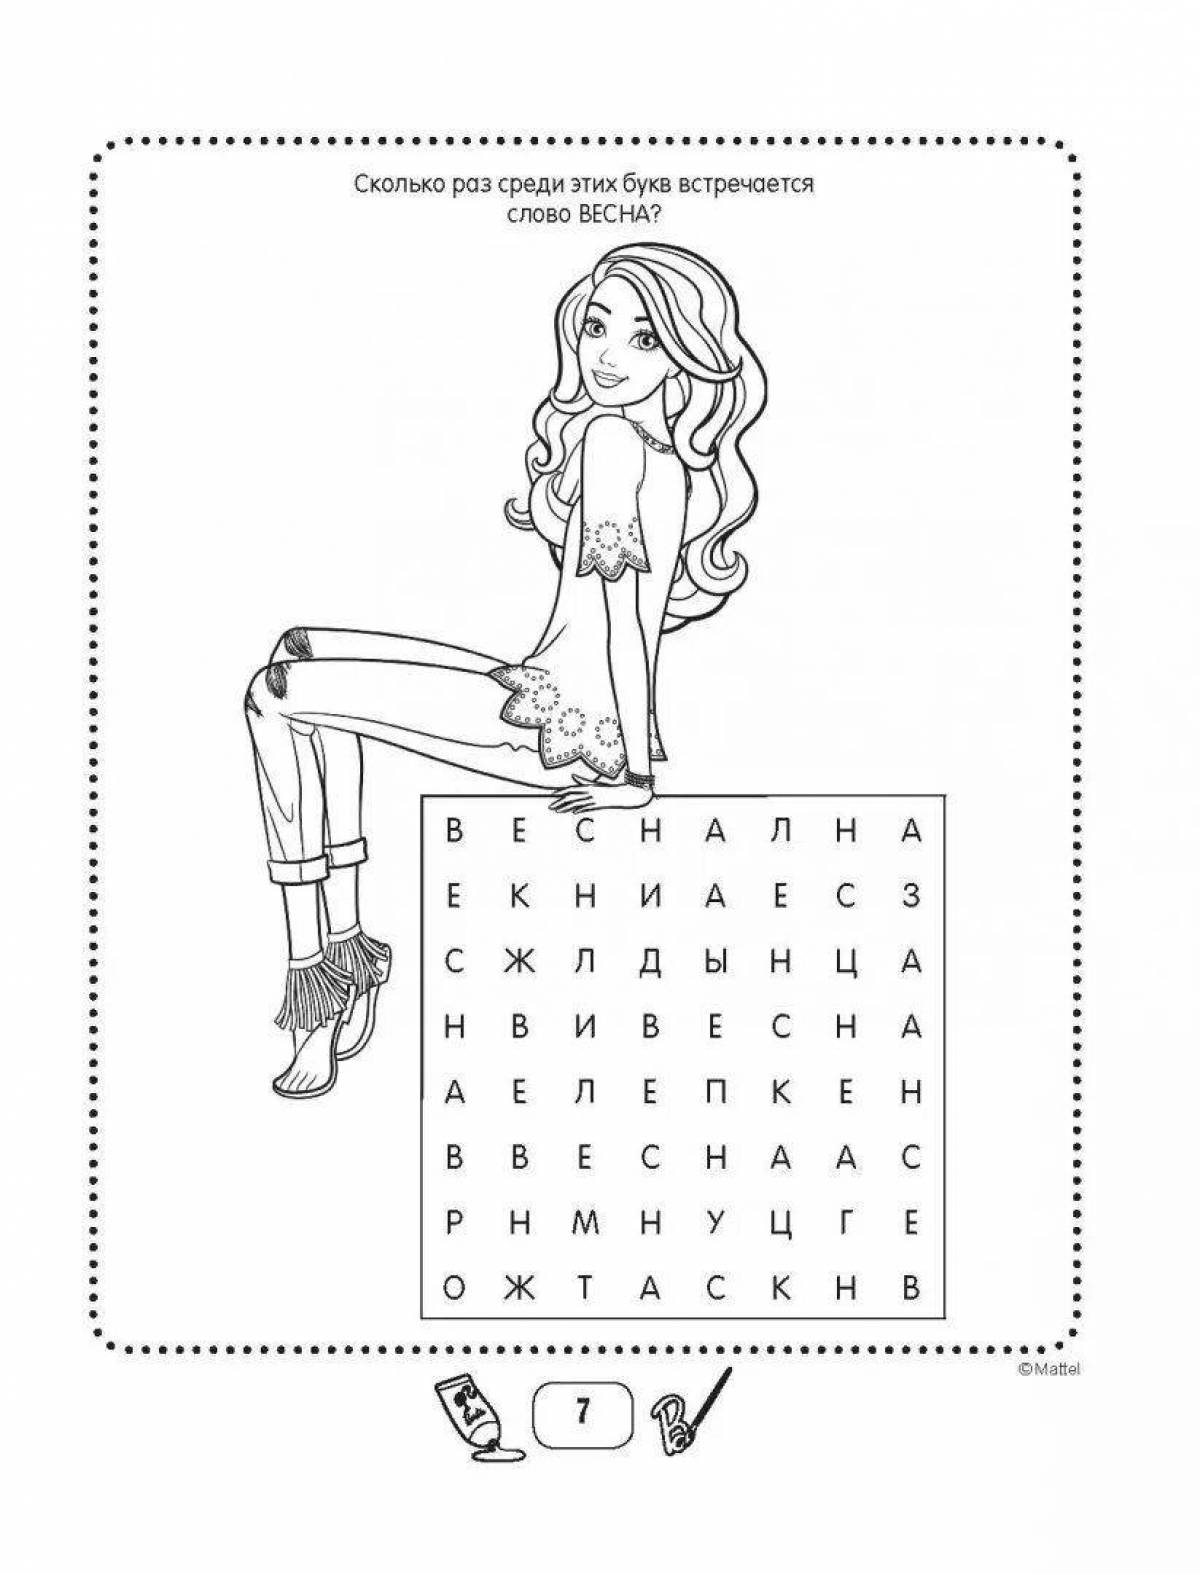 Brilliant cheek fight crossword puzzle